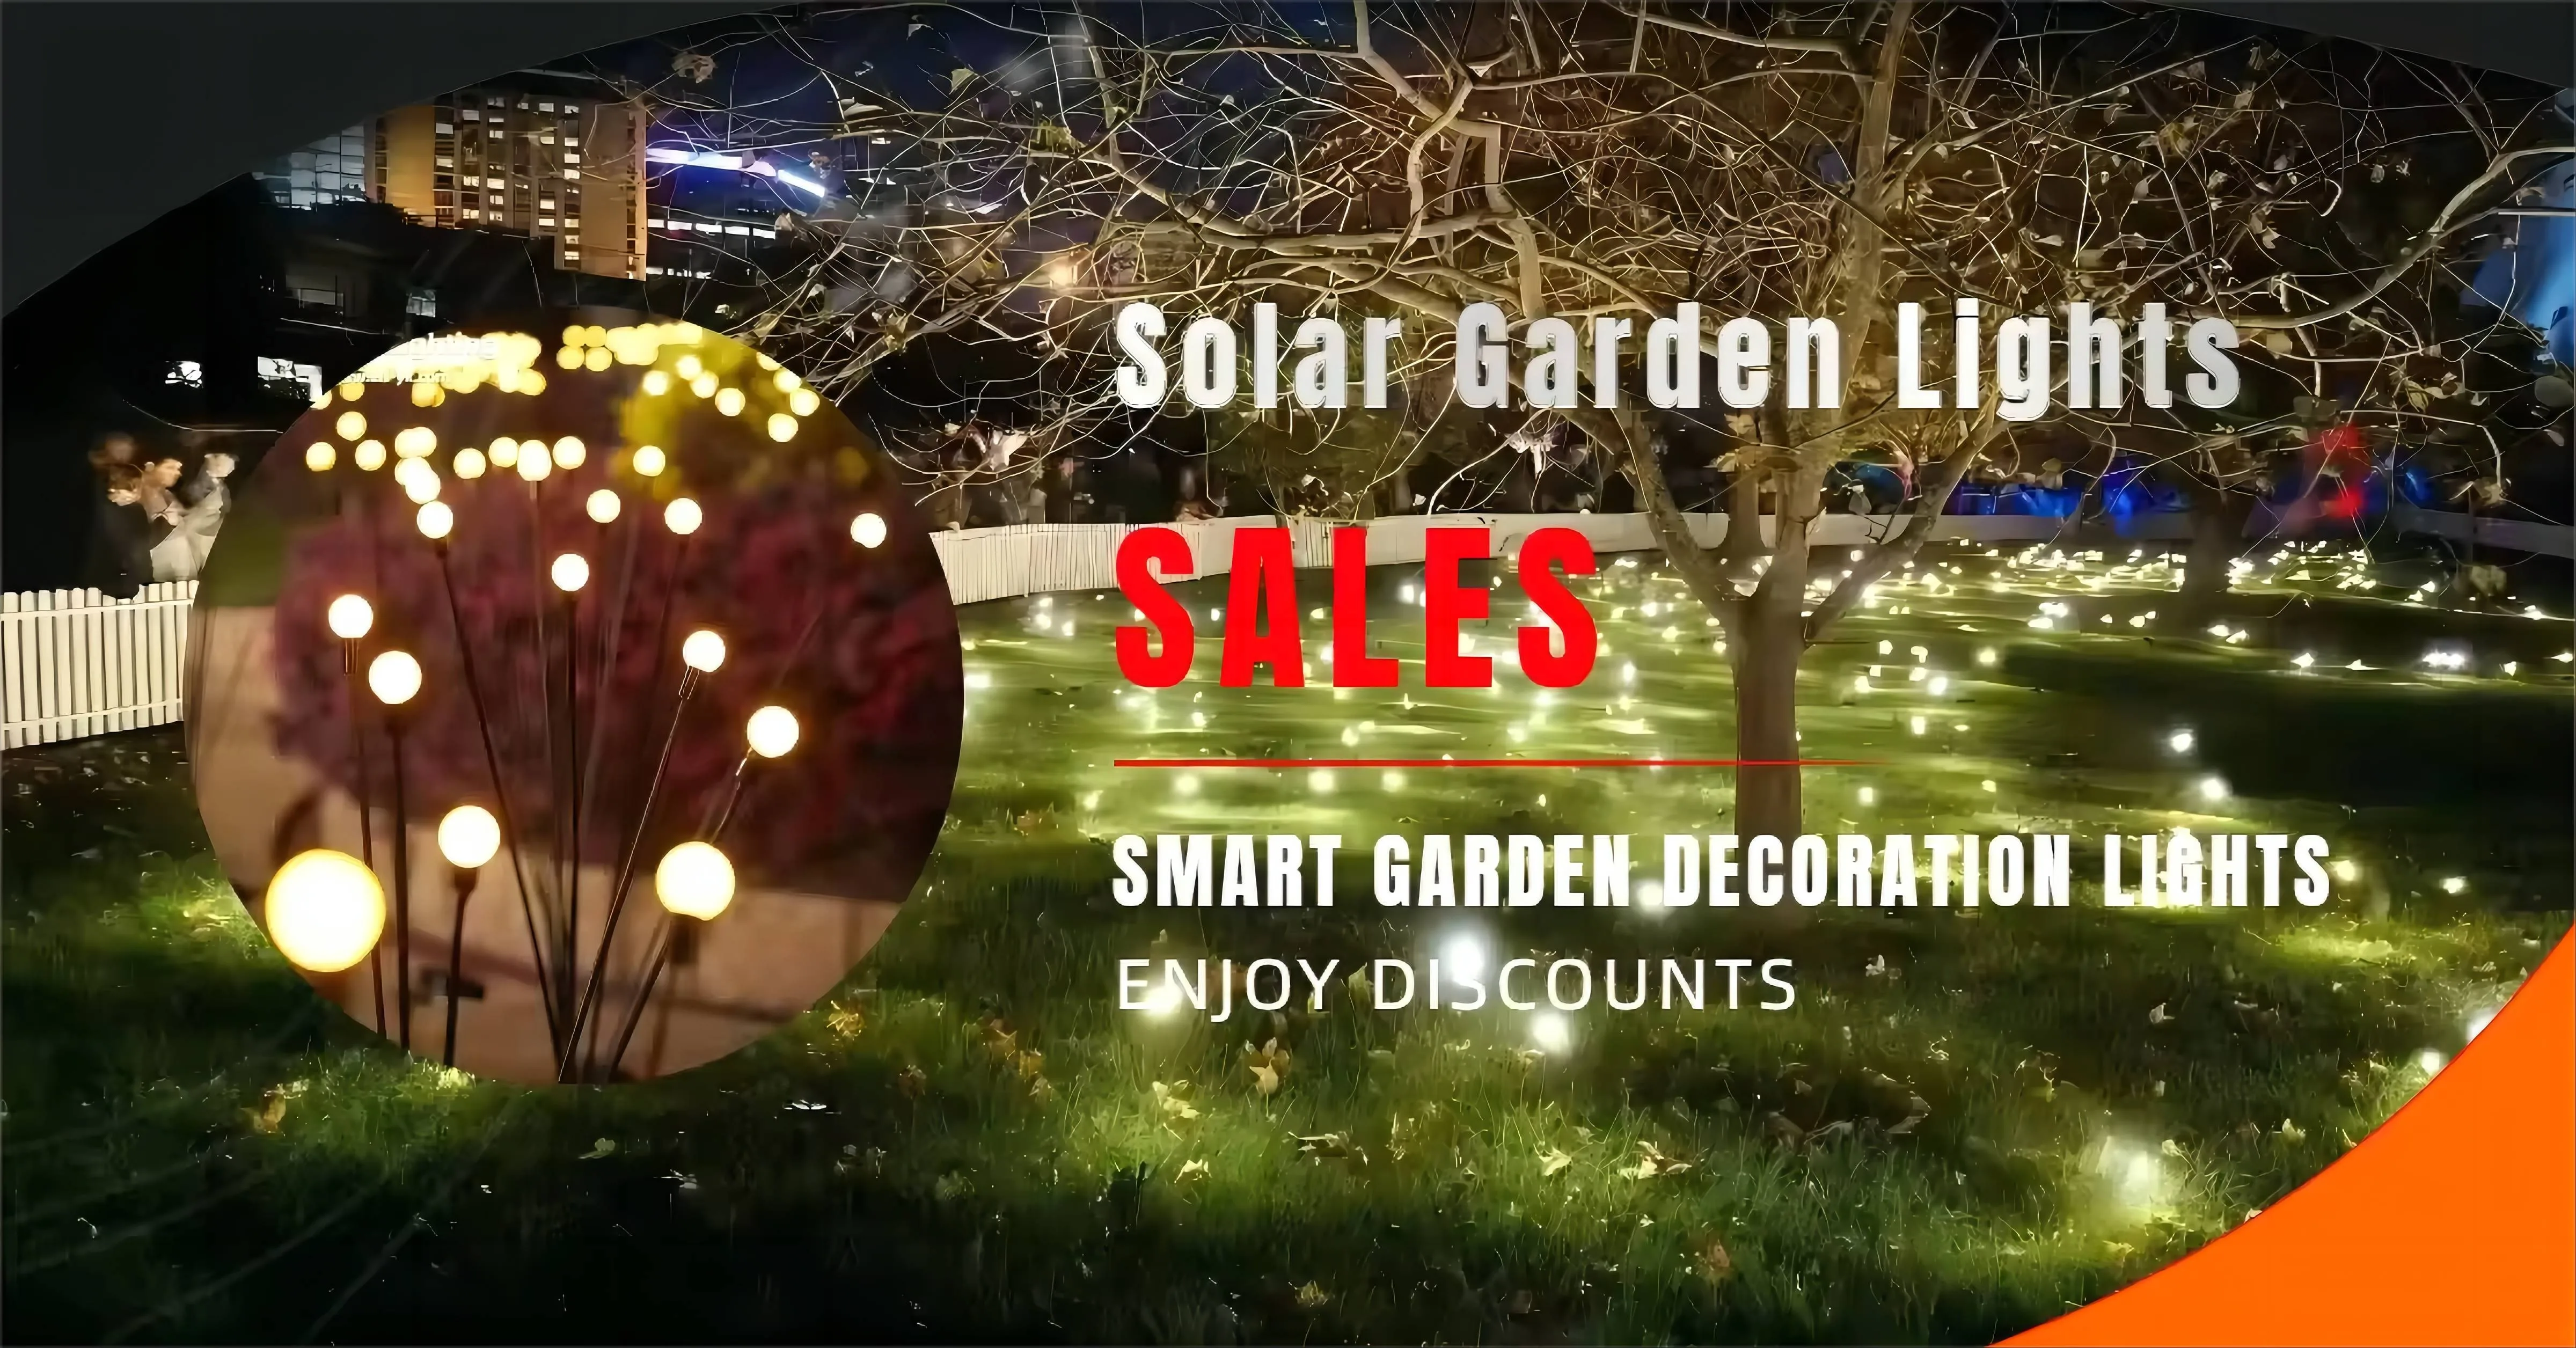 Solar garden light